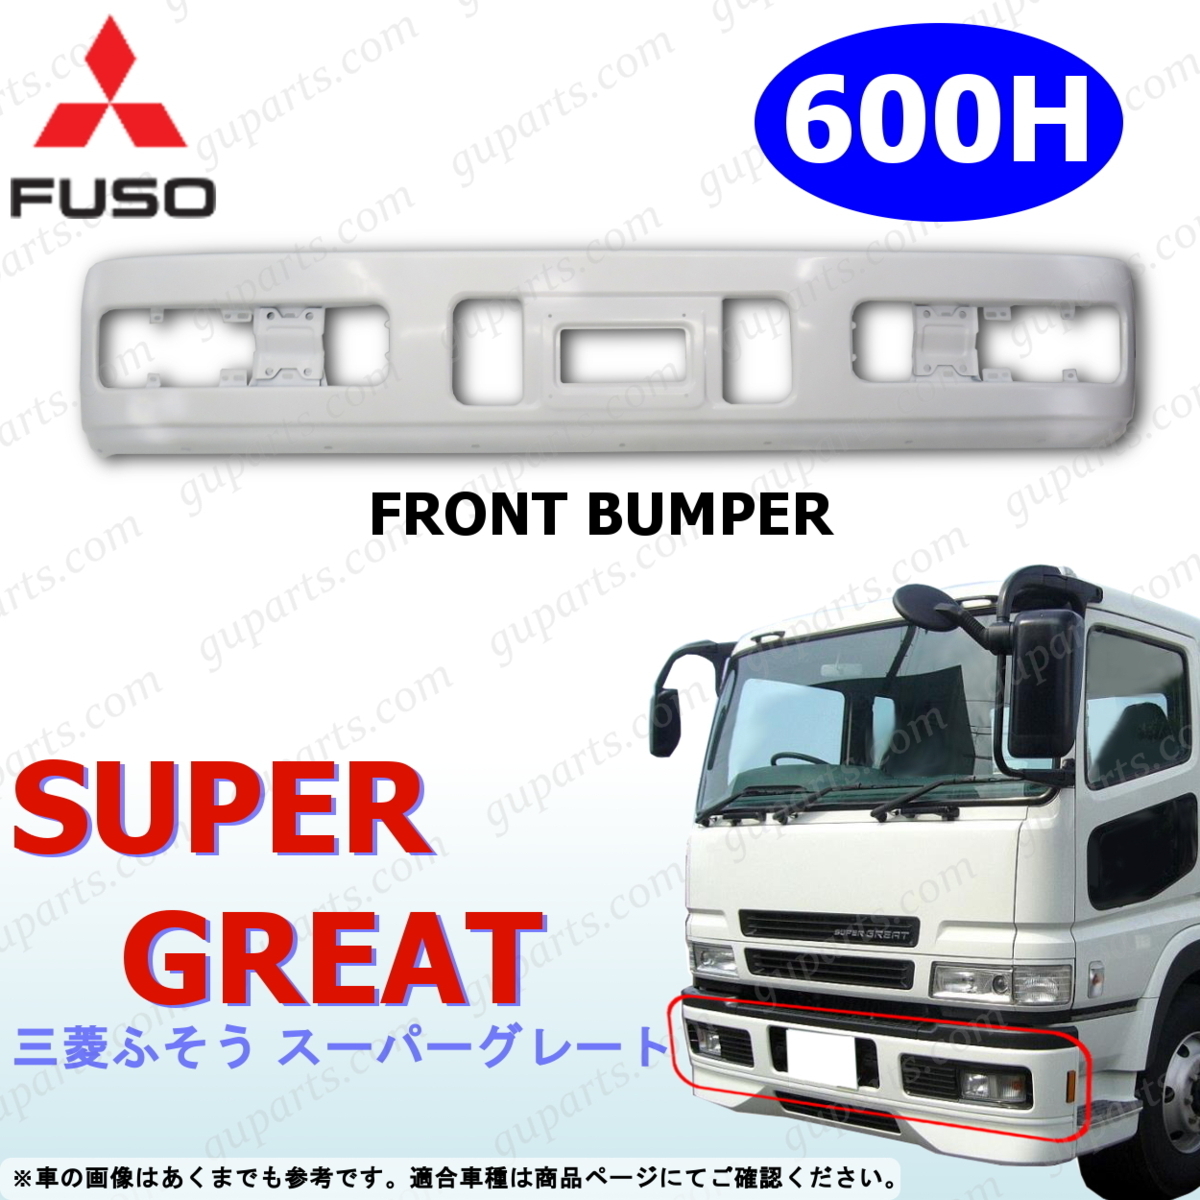  Mitsubishi Fuso Super Great front bumper upper 600H white white H8~H19 FU54 FU55 FU57 FY50 FY51 large truck parts 